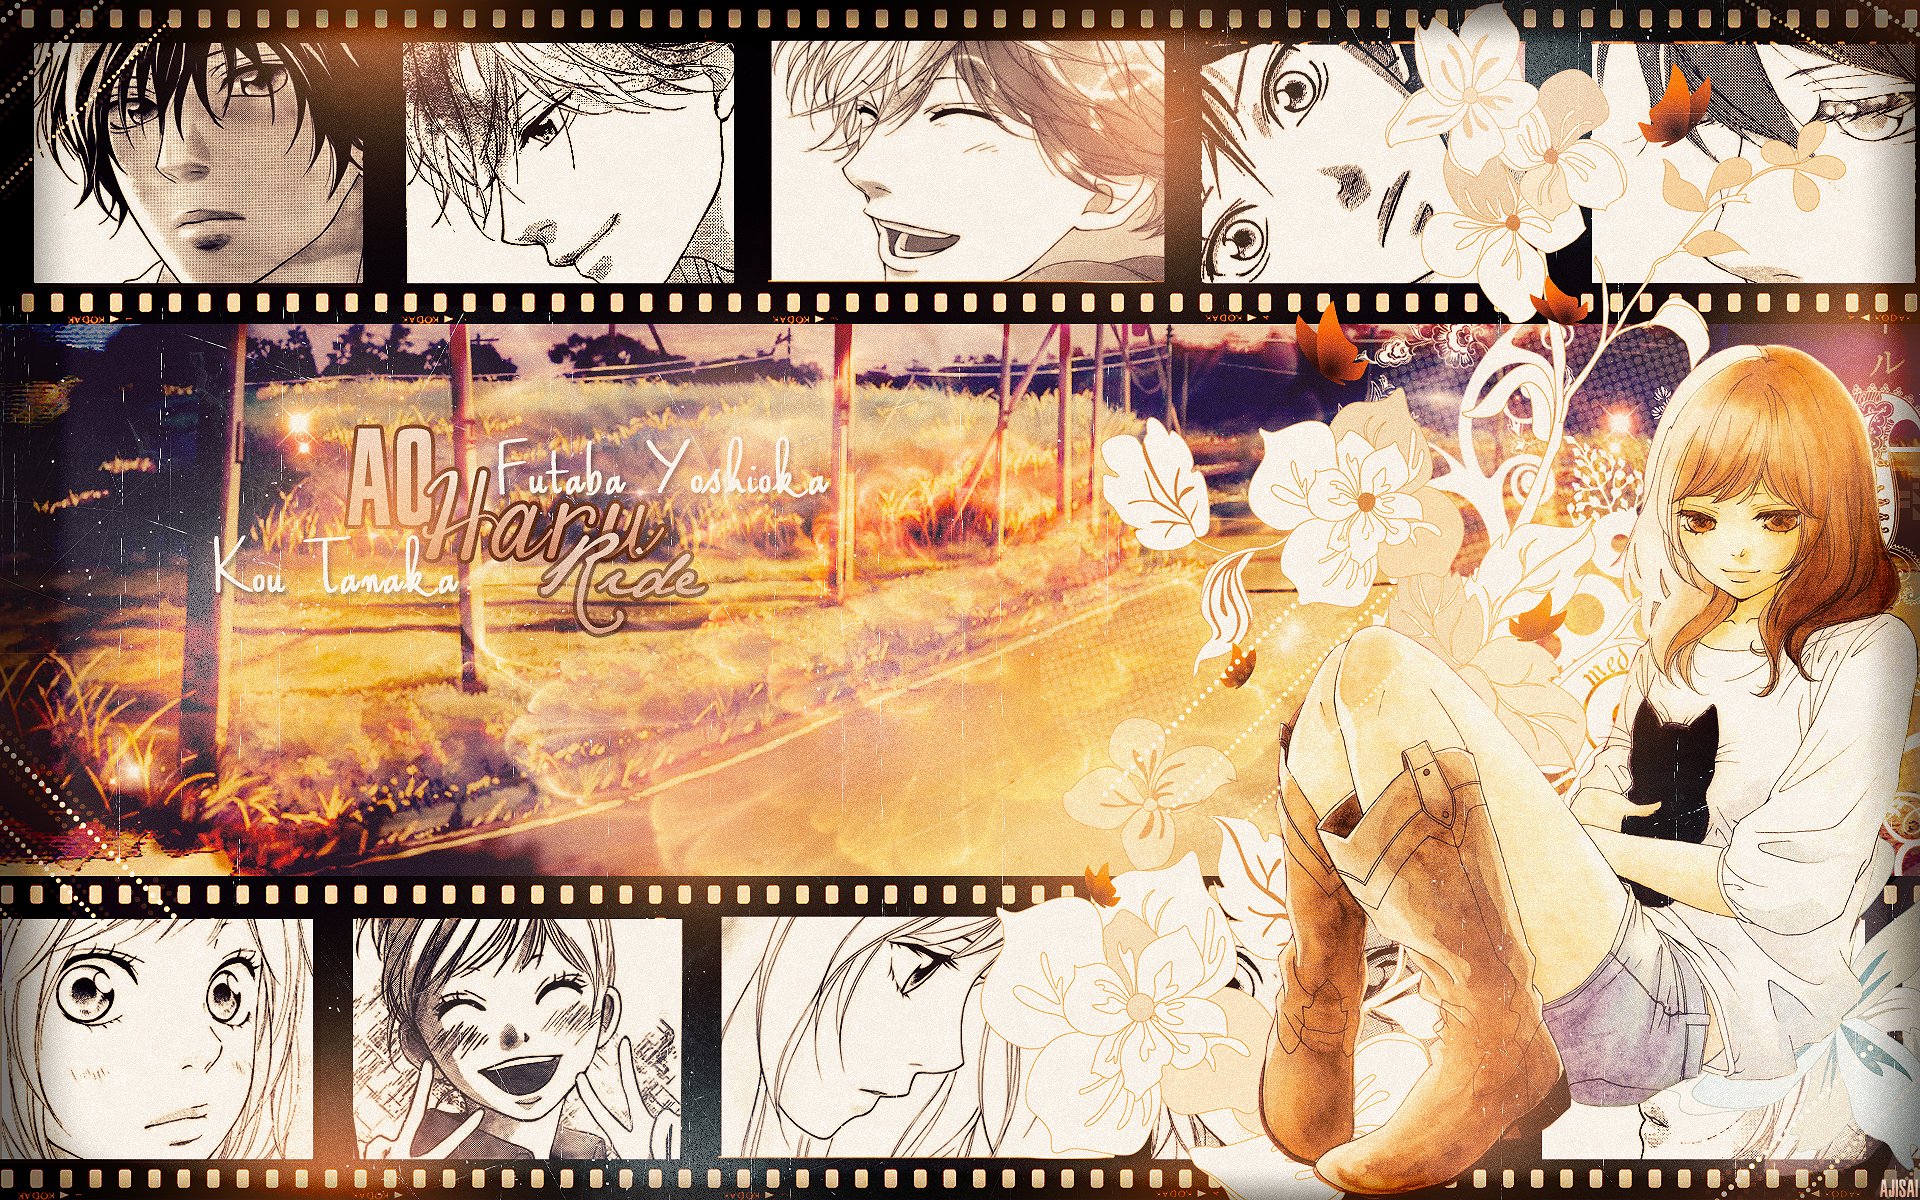 Anime Ao Haru Ride HD Wallpaper